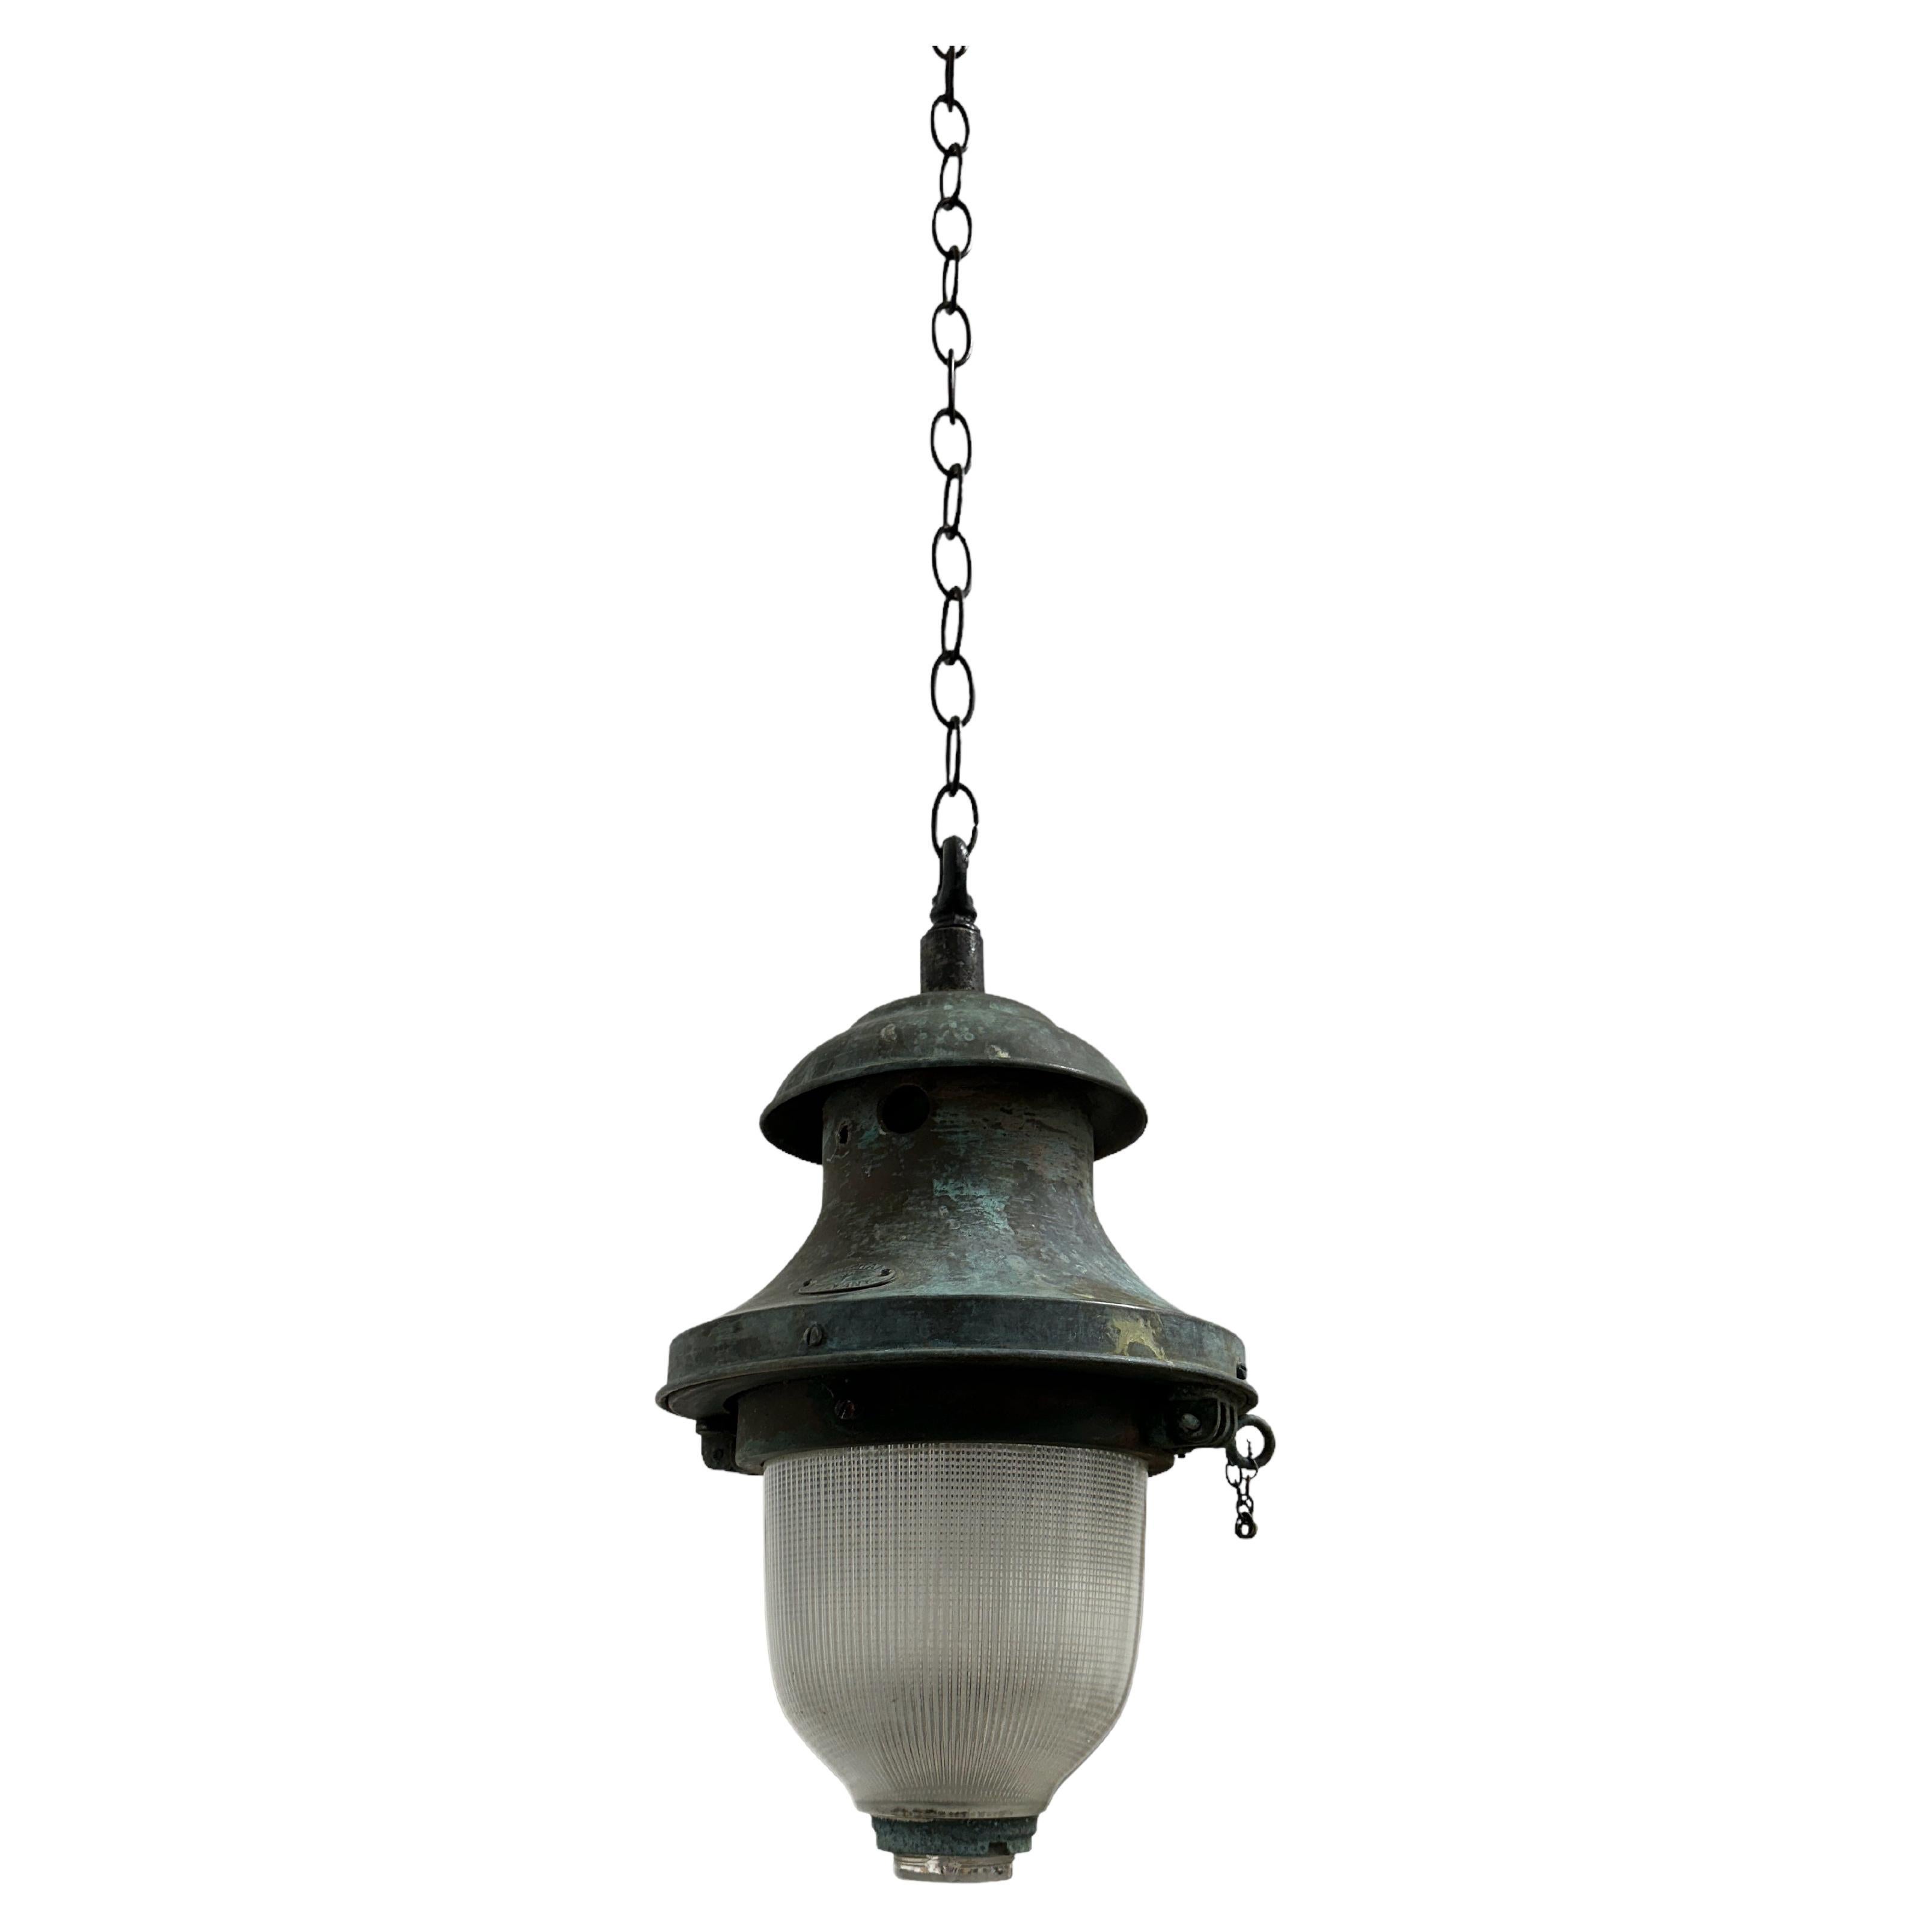 Antique Industrial French Holophane Devant Ceiling Pendant Street Light Lamp